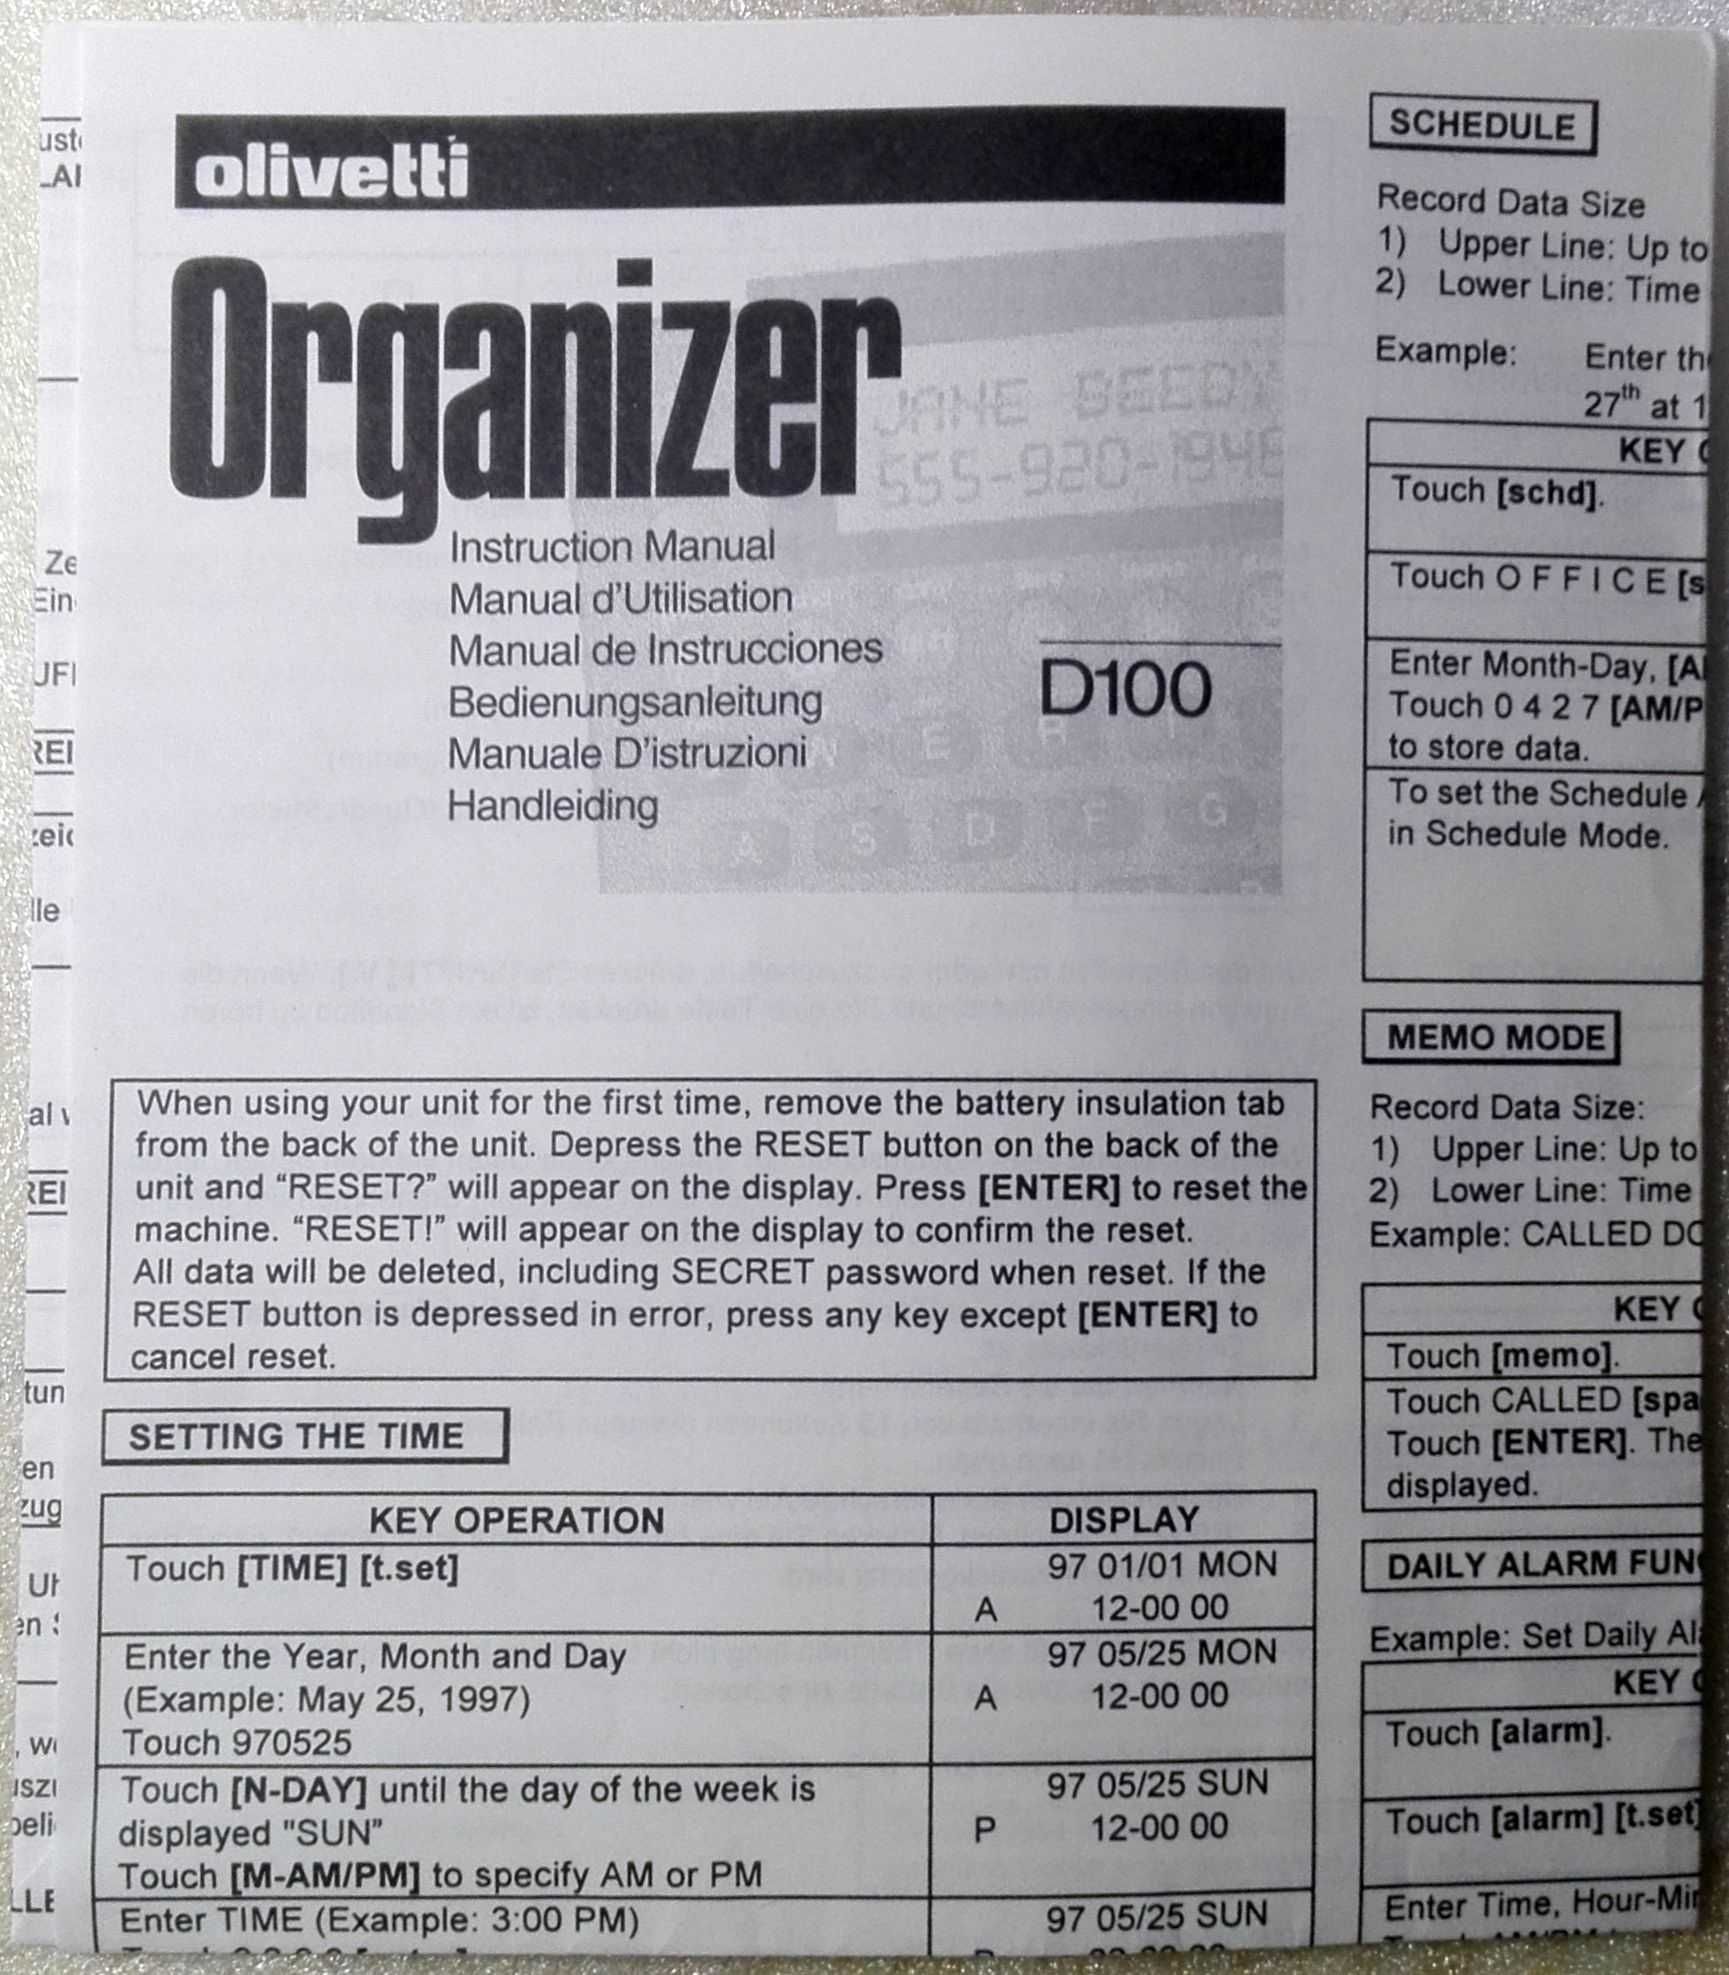 Agenda Olivetti Organizer D100